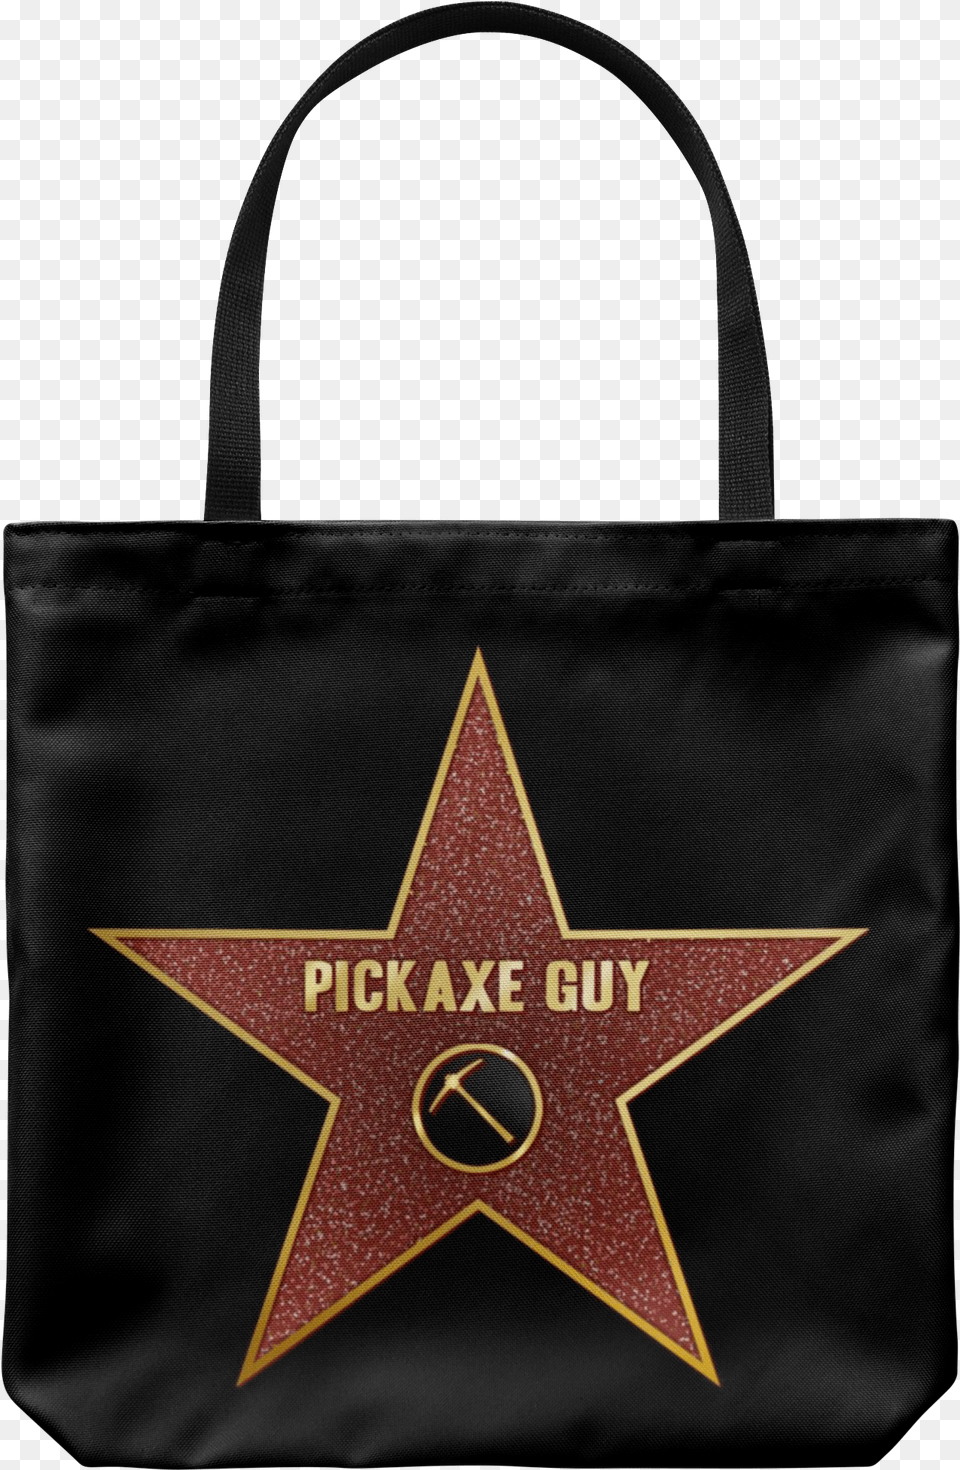 Pickaxe Guy Toteclass Tote Bag, Accessories, Handbag, Tote Bag Free Png Download